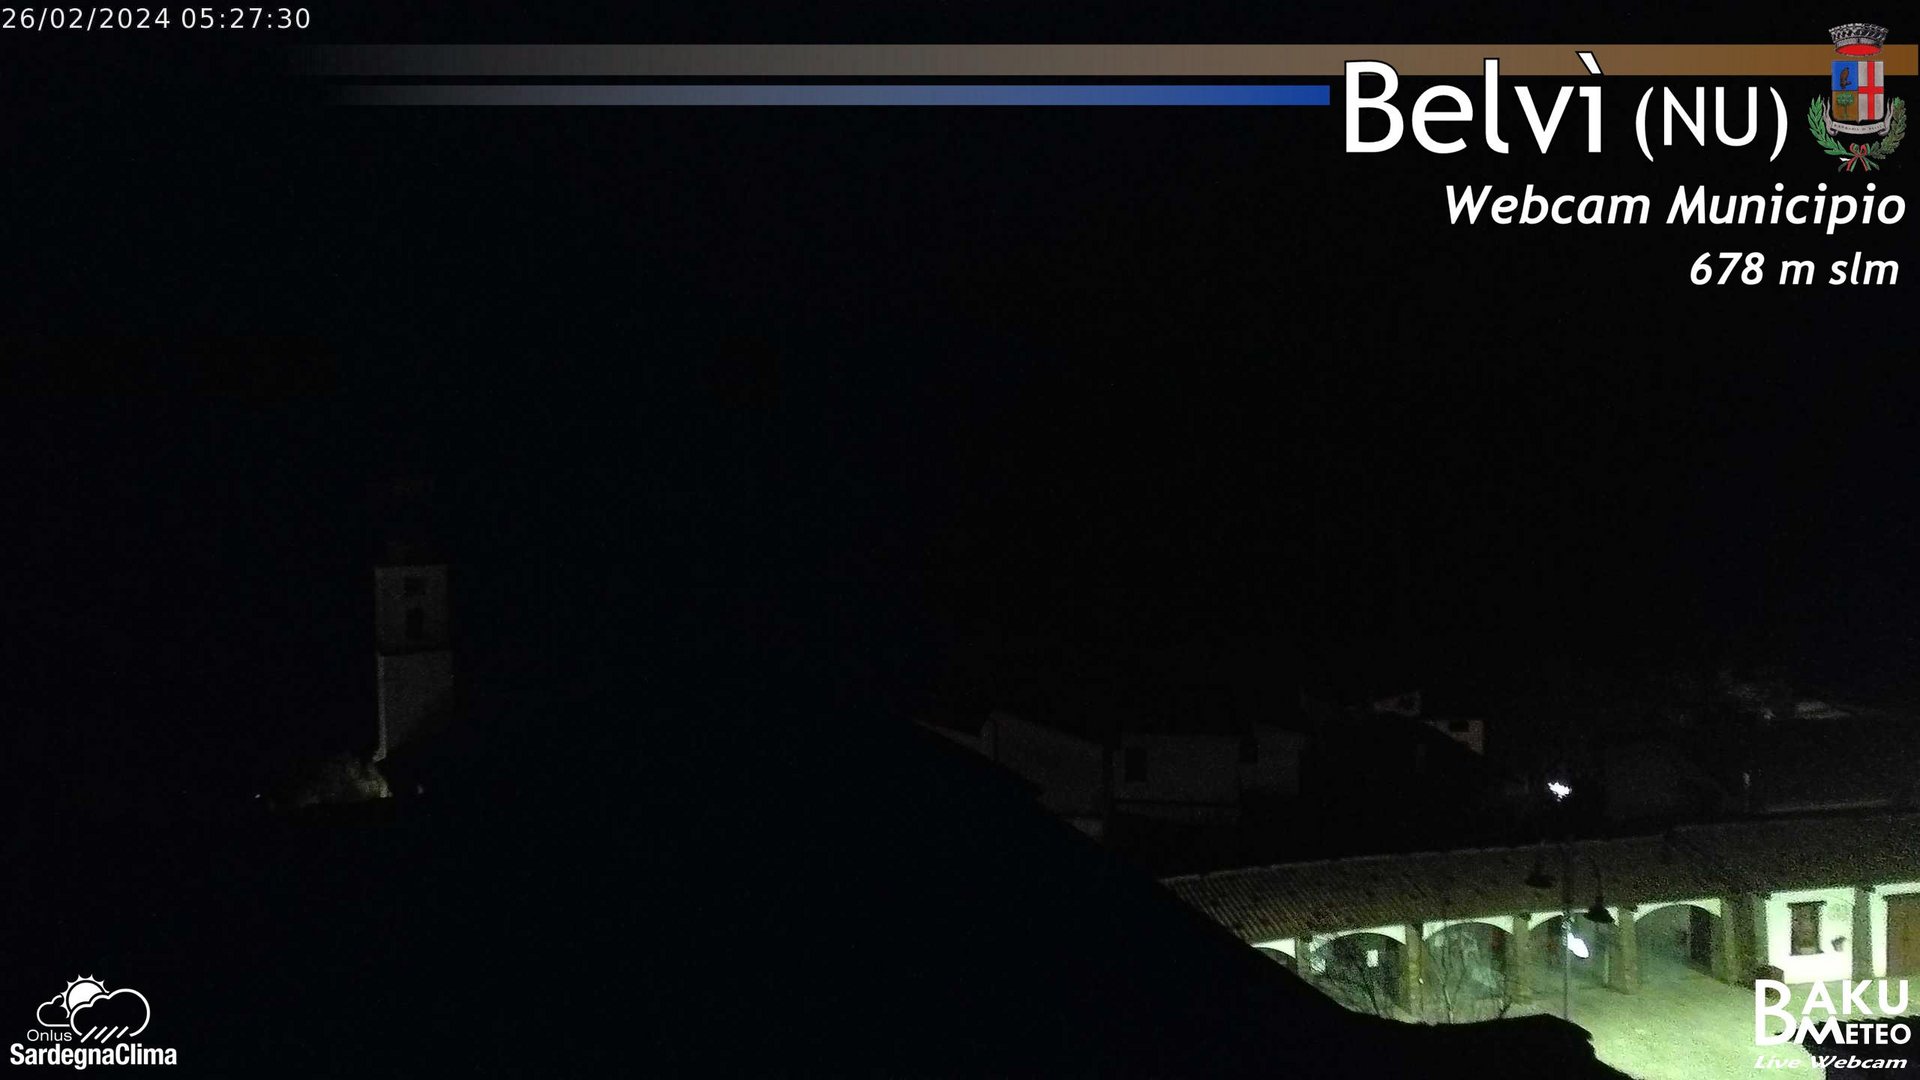 time-lapse frame, Belvi Municipio webcam